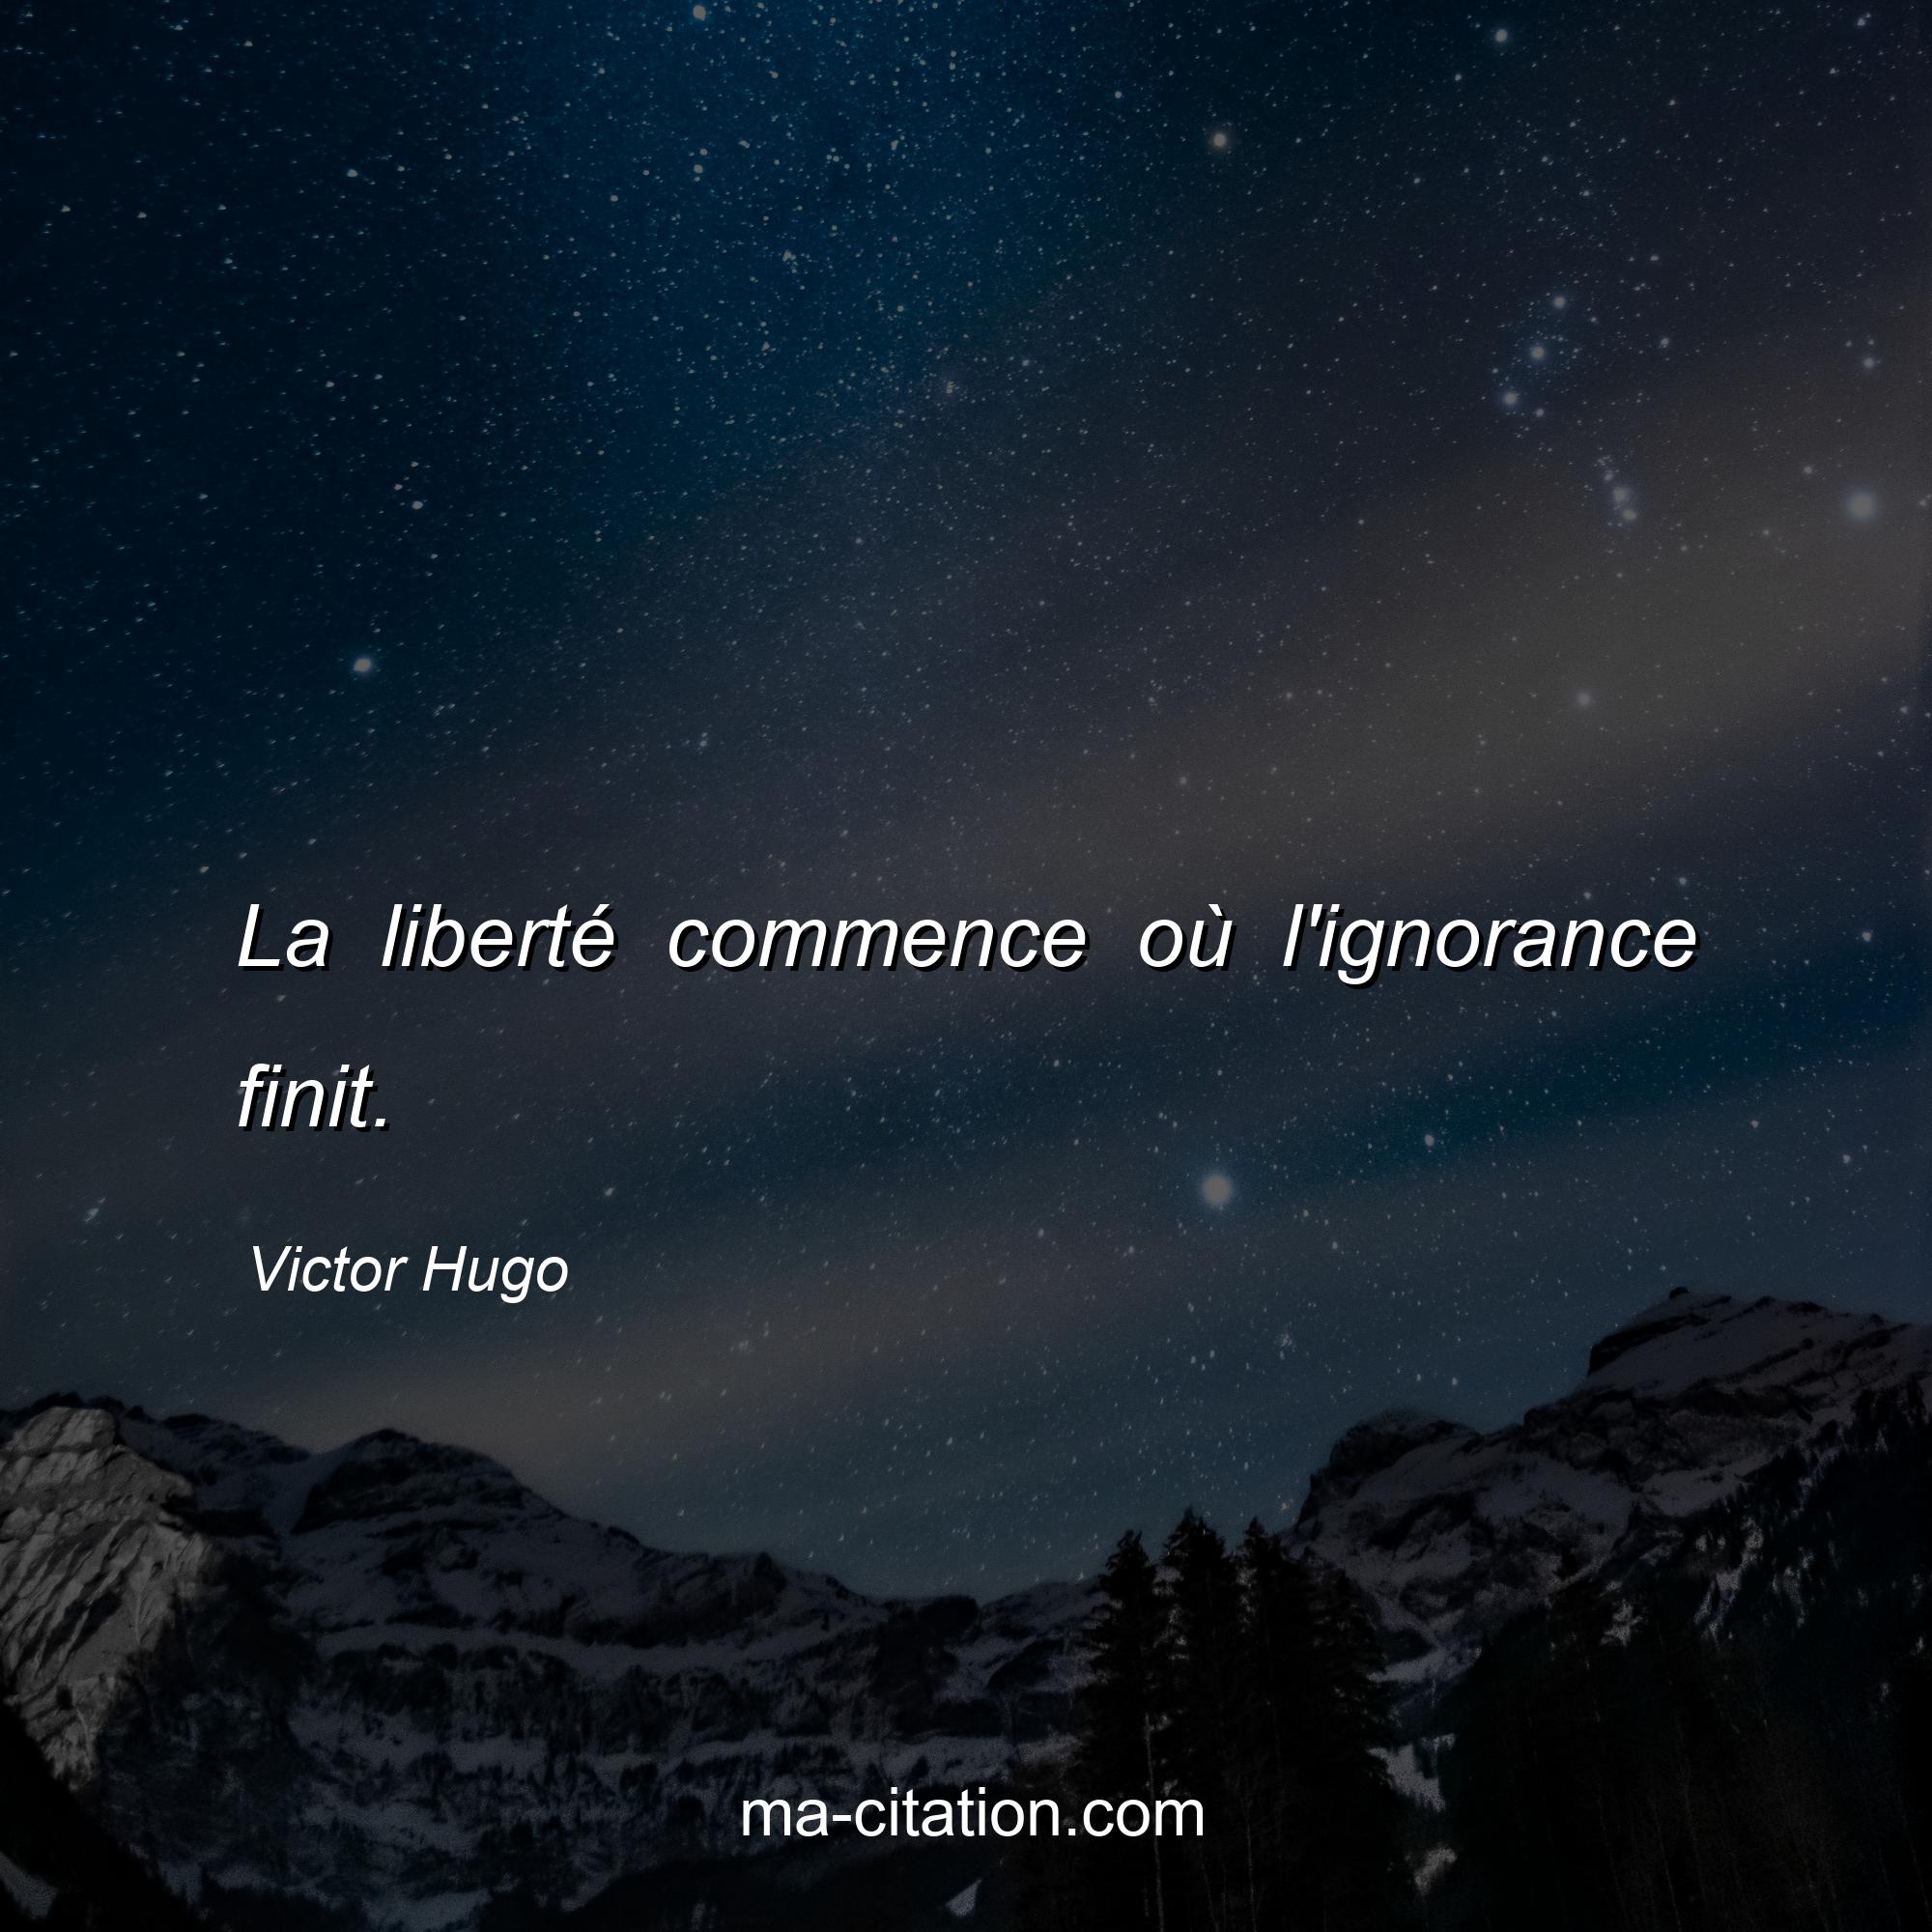 Victor Hugo : La liberté commence où l'ignorance finit.